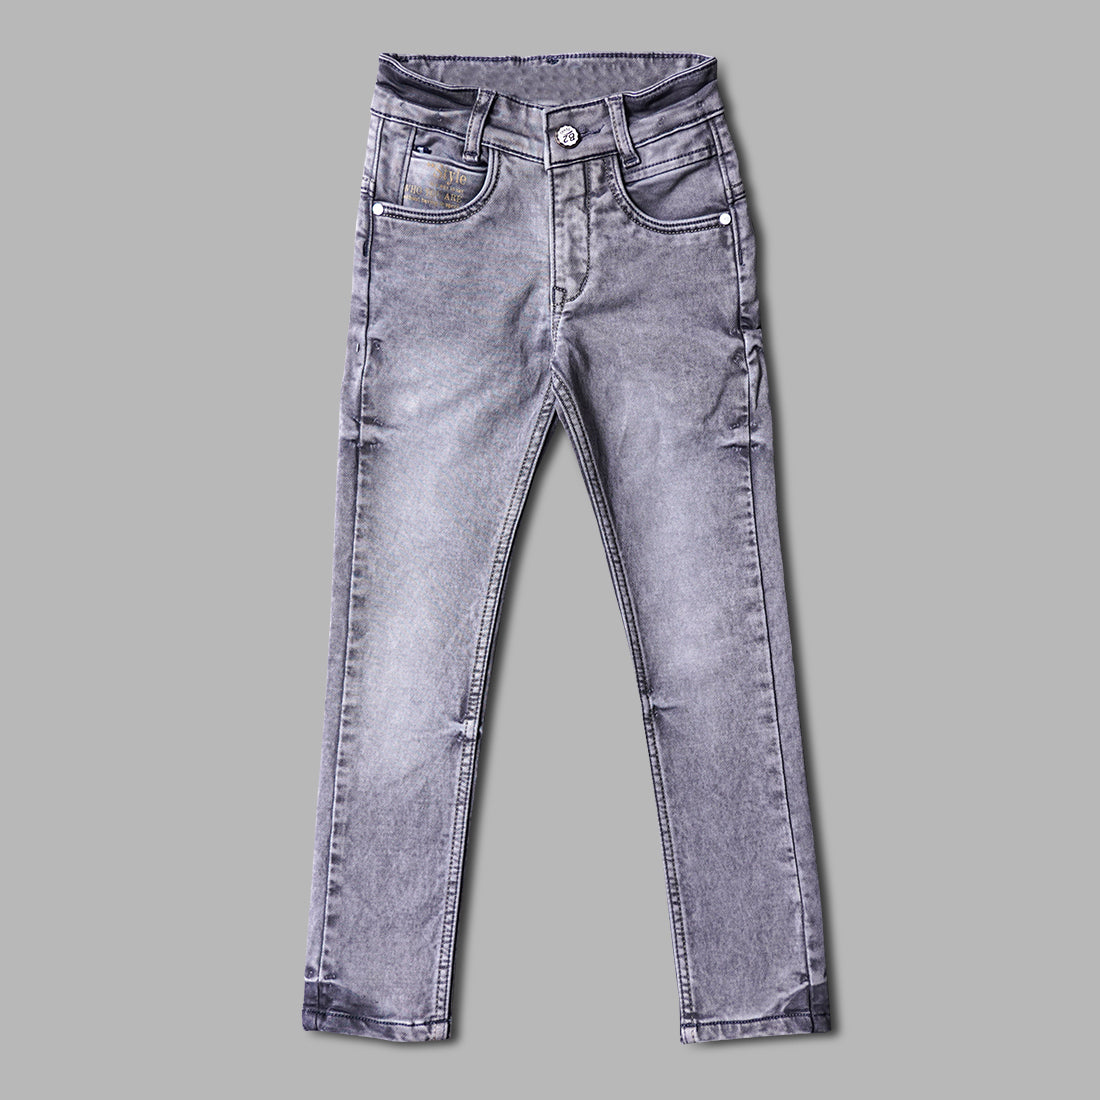 Buy Grey Mid Rise Glenn Slim Fit Jeans for Boys Online at Jack&Jones Junior  |223008301